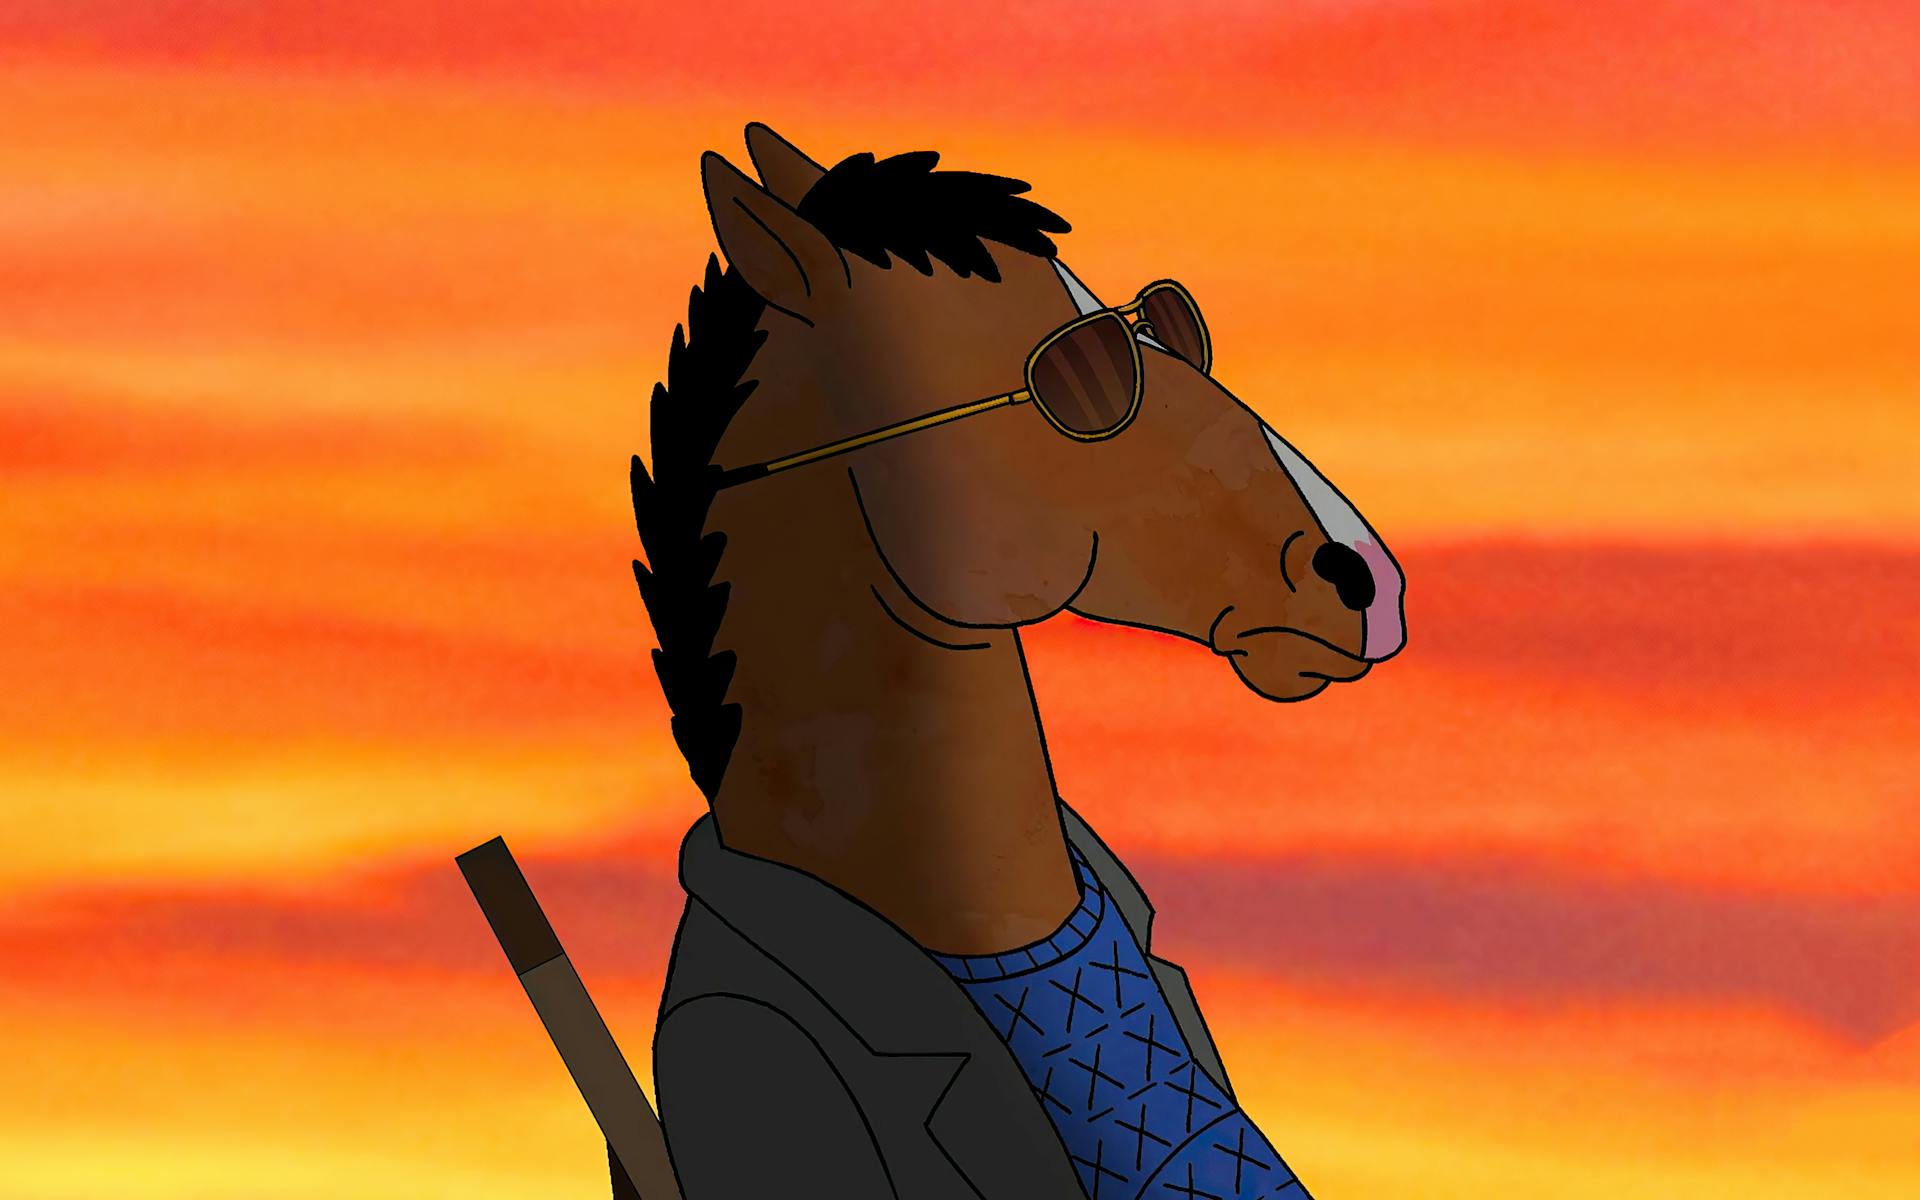 🐴 Thoughts on BoJack Horseman